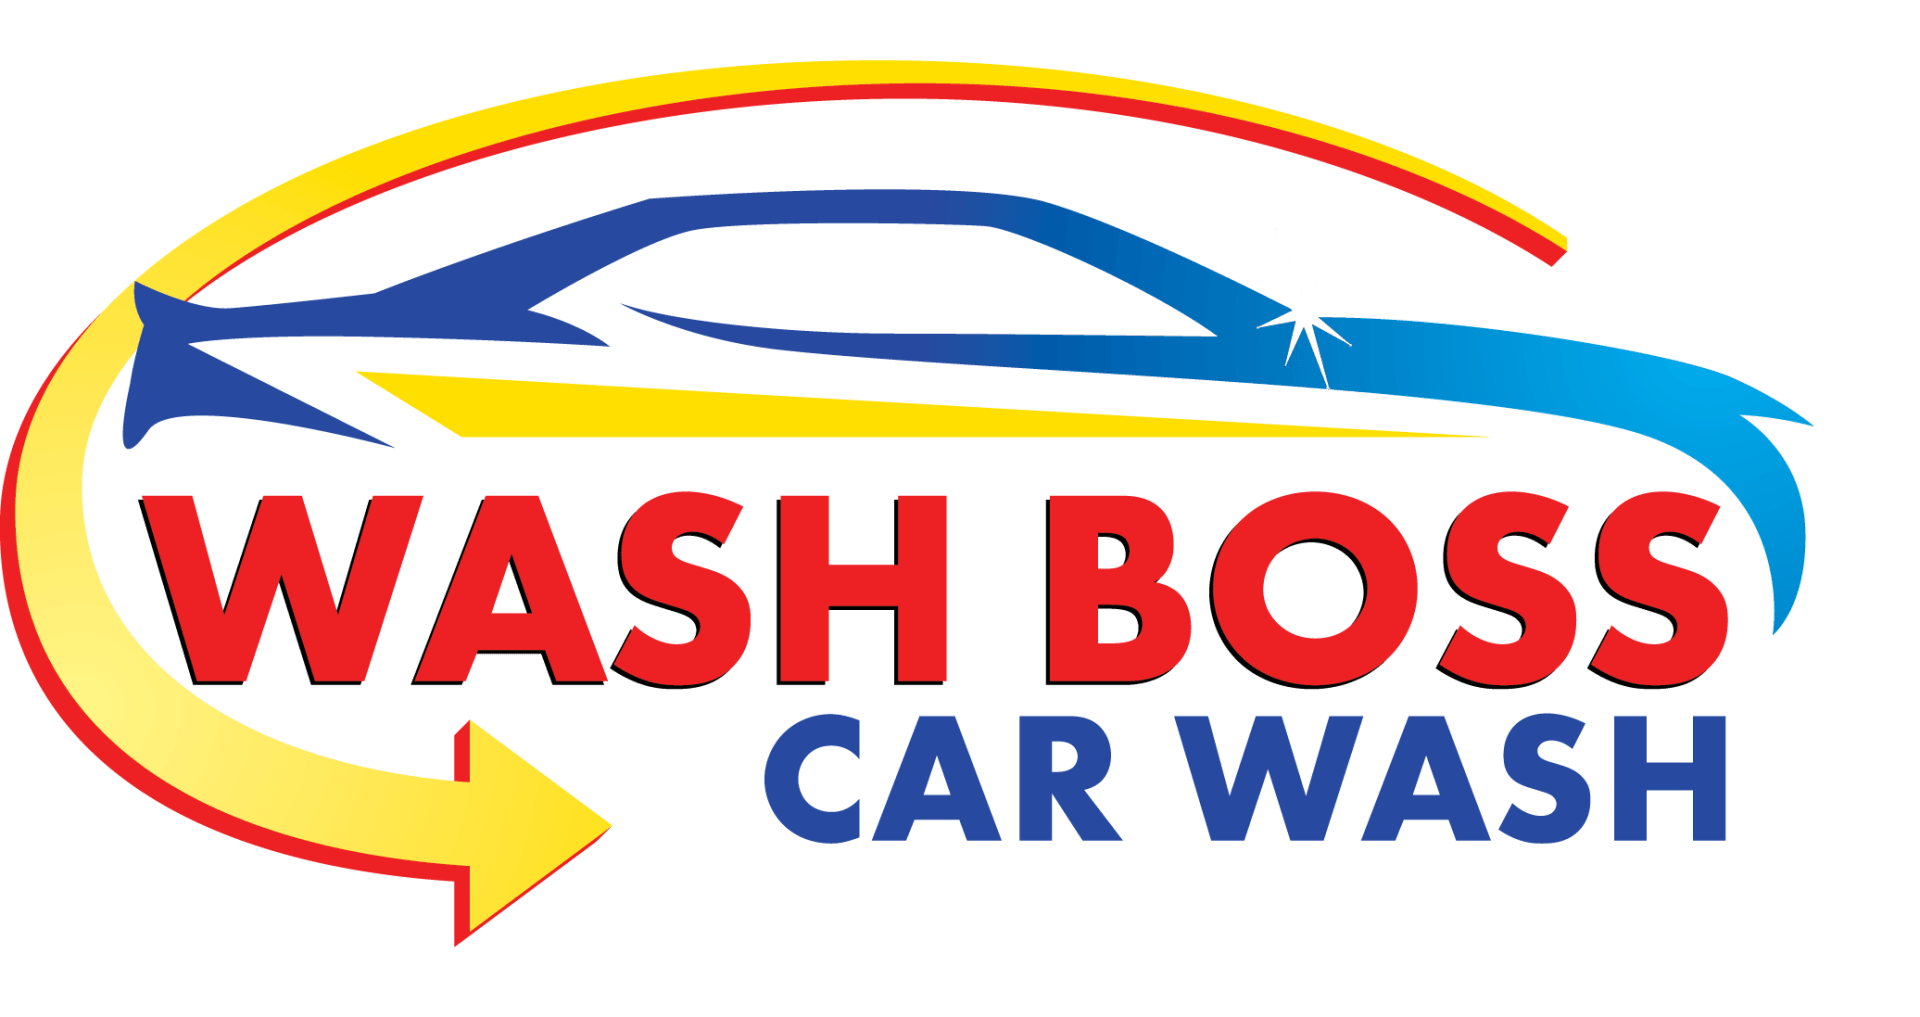 Full-service Car Wash Rensselaer Ny Wash Boss Car Wash